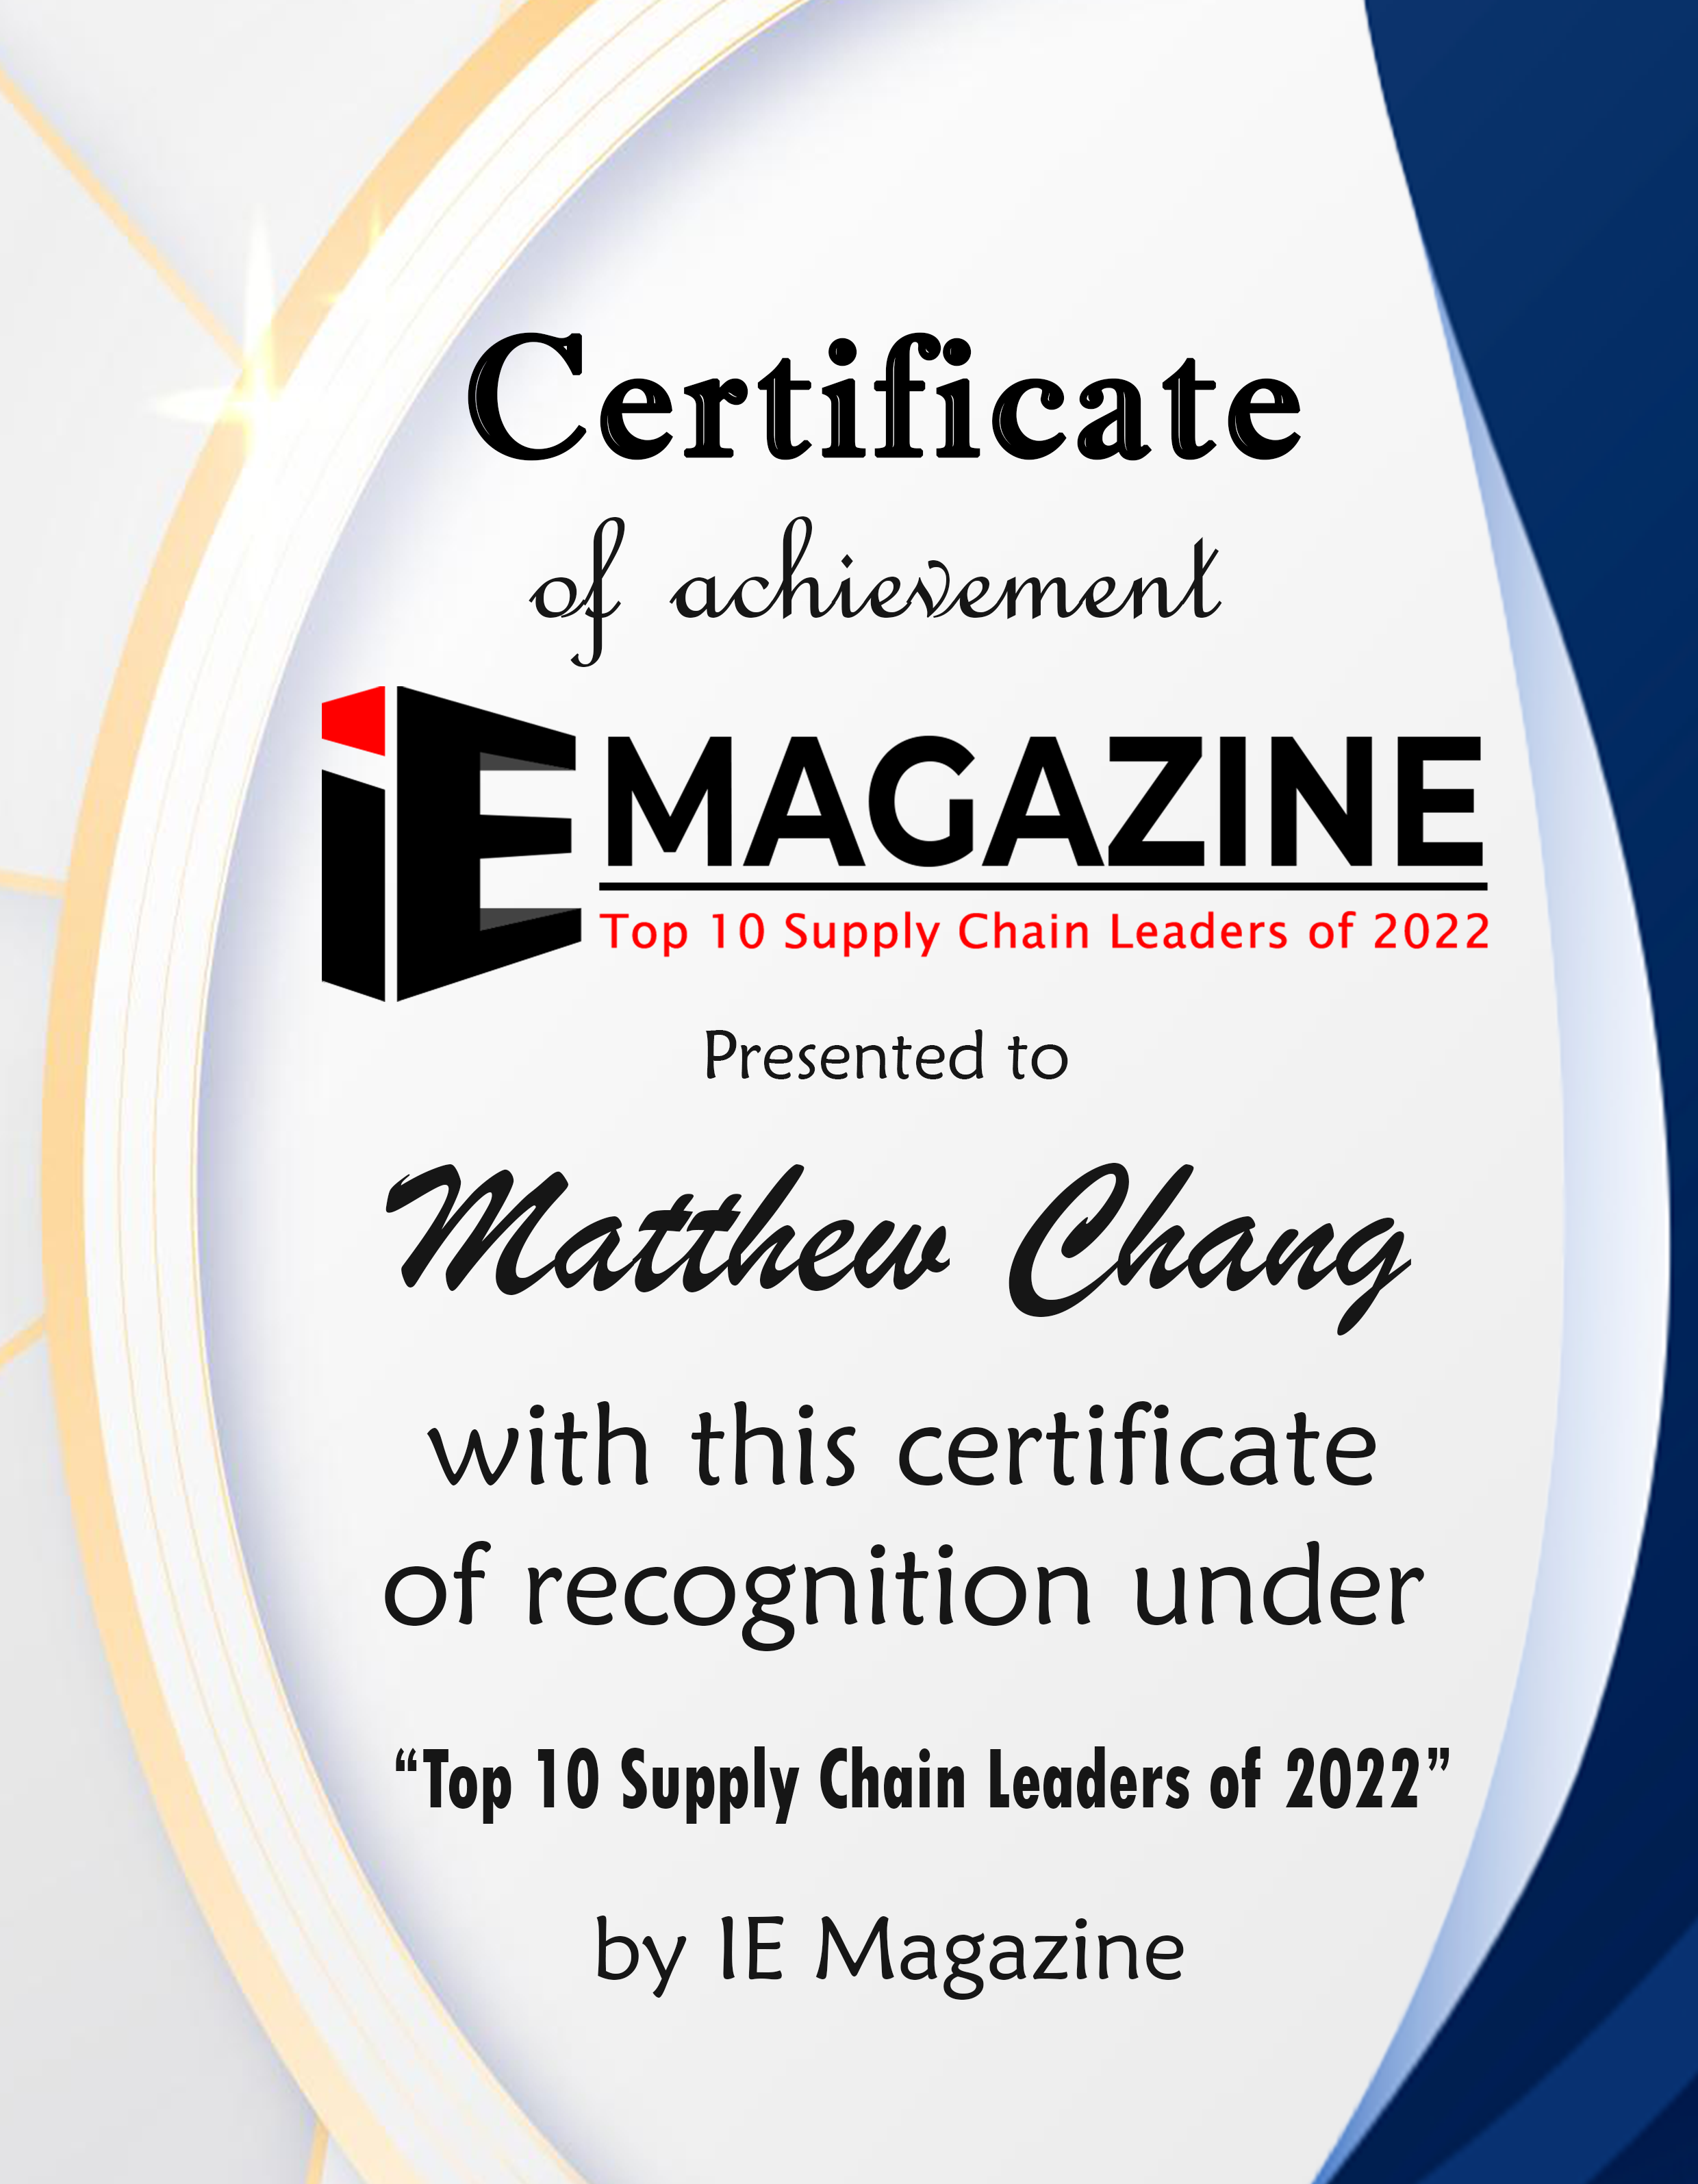 Matthew Chang, Founder & Principal at Chang Industrial Certificate